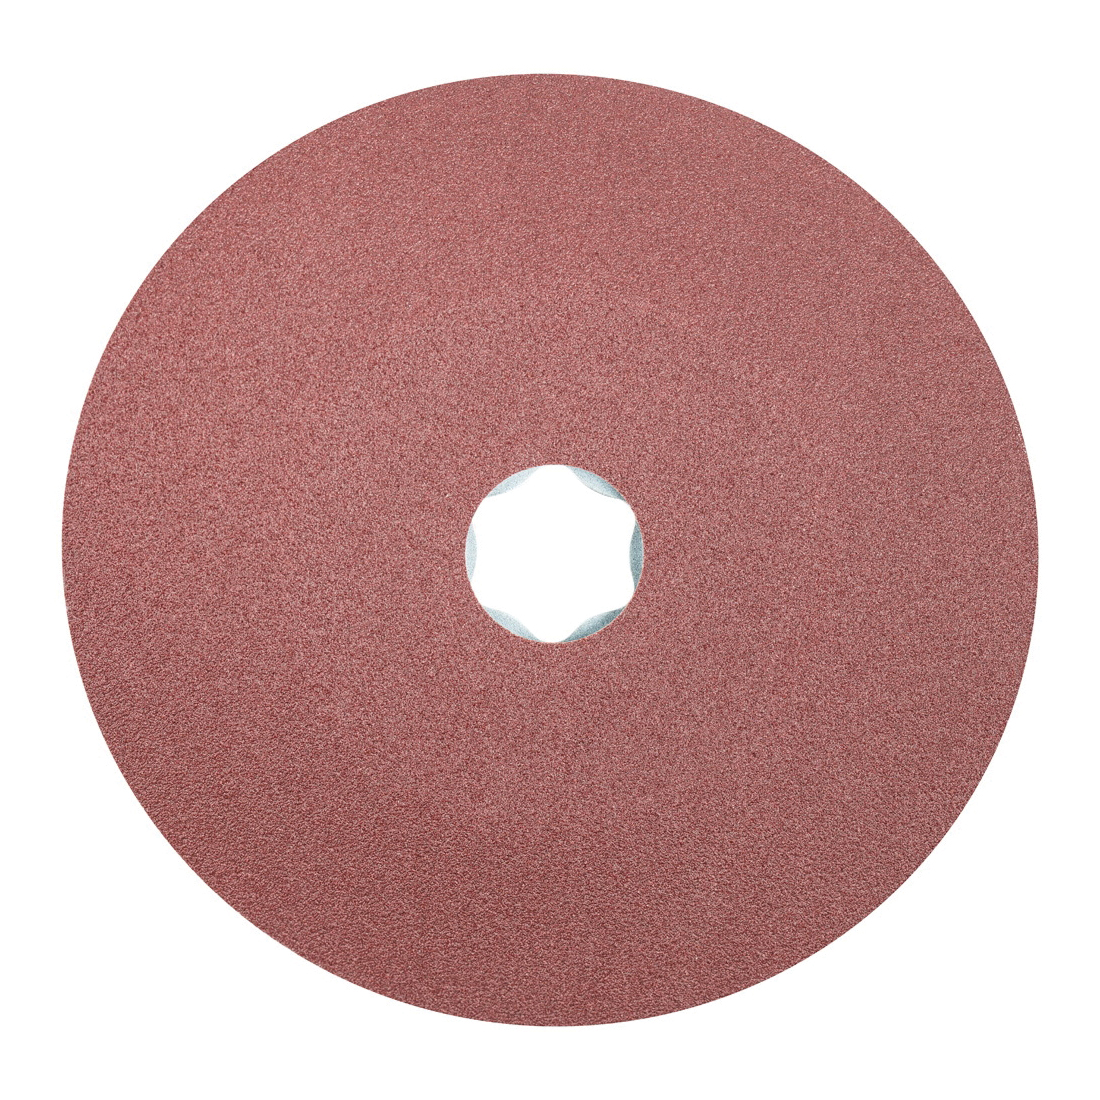 PFERD COMBICLICK® 40105 Coated Abrasive Disc, 5 in Dia, 120 Grit, Aluminum Oxide Abrasive